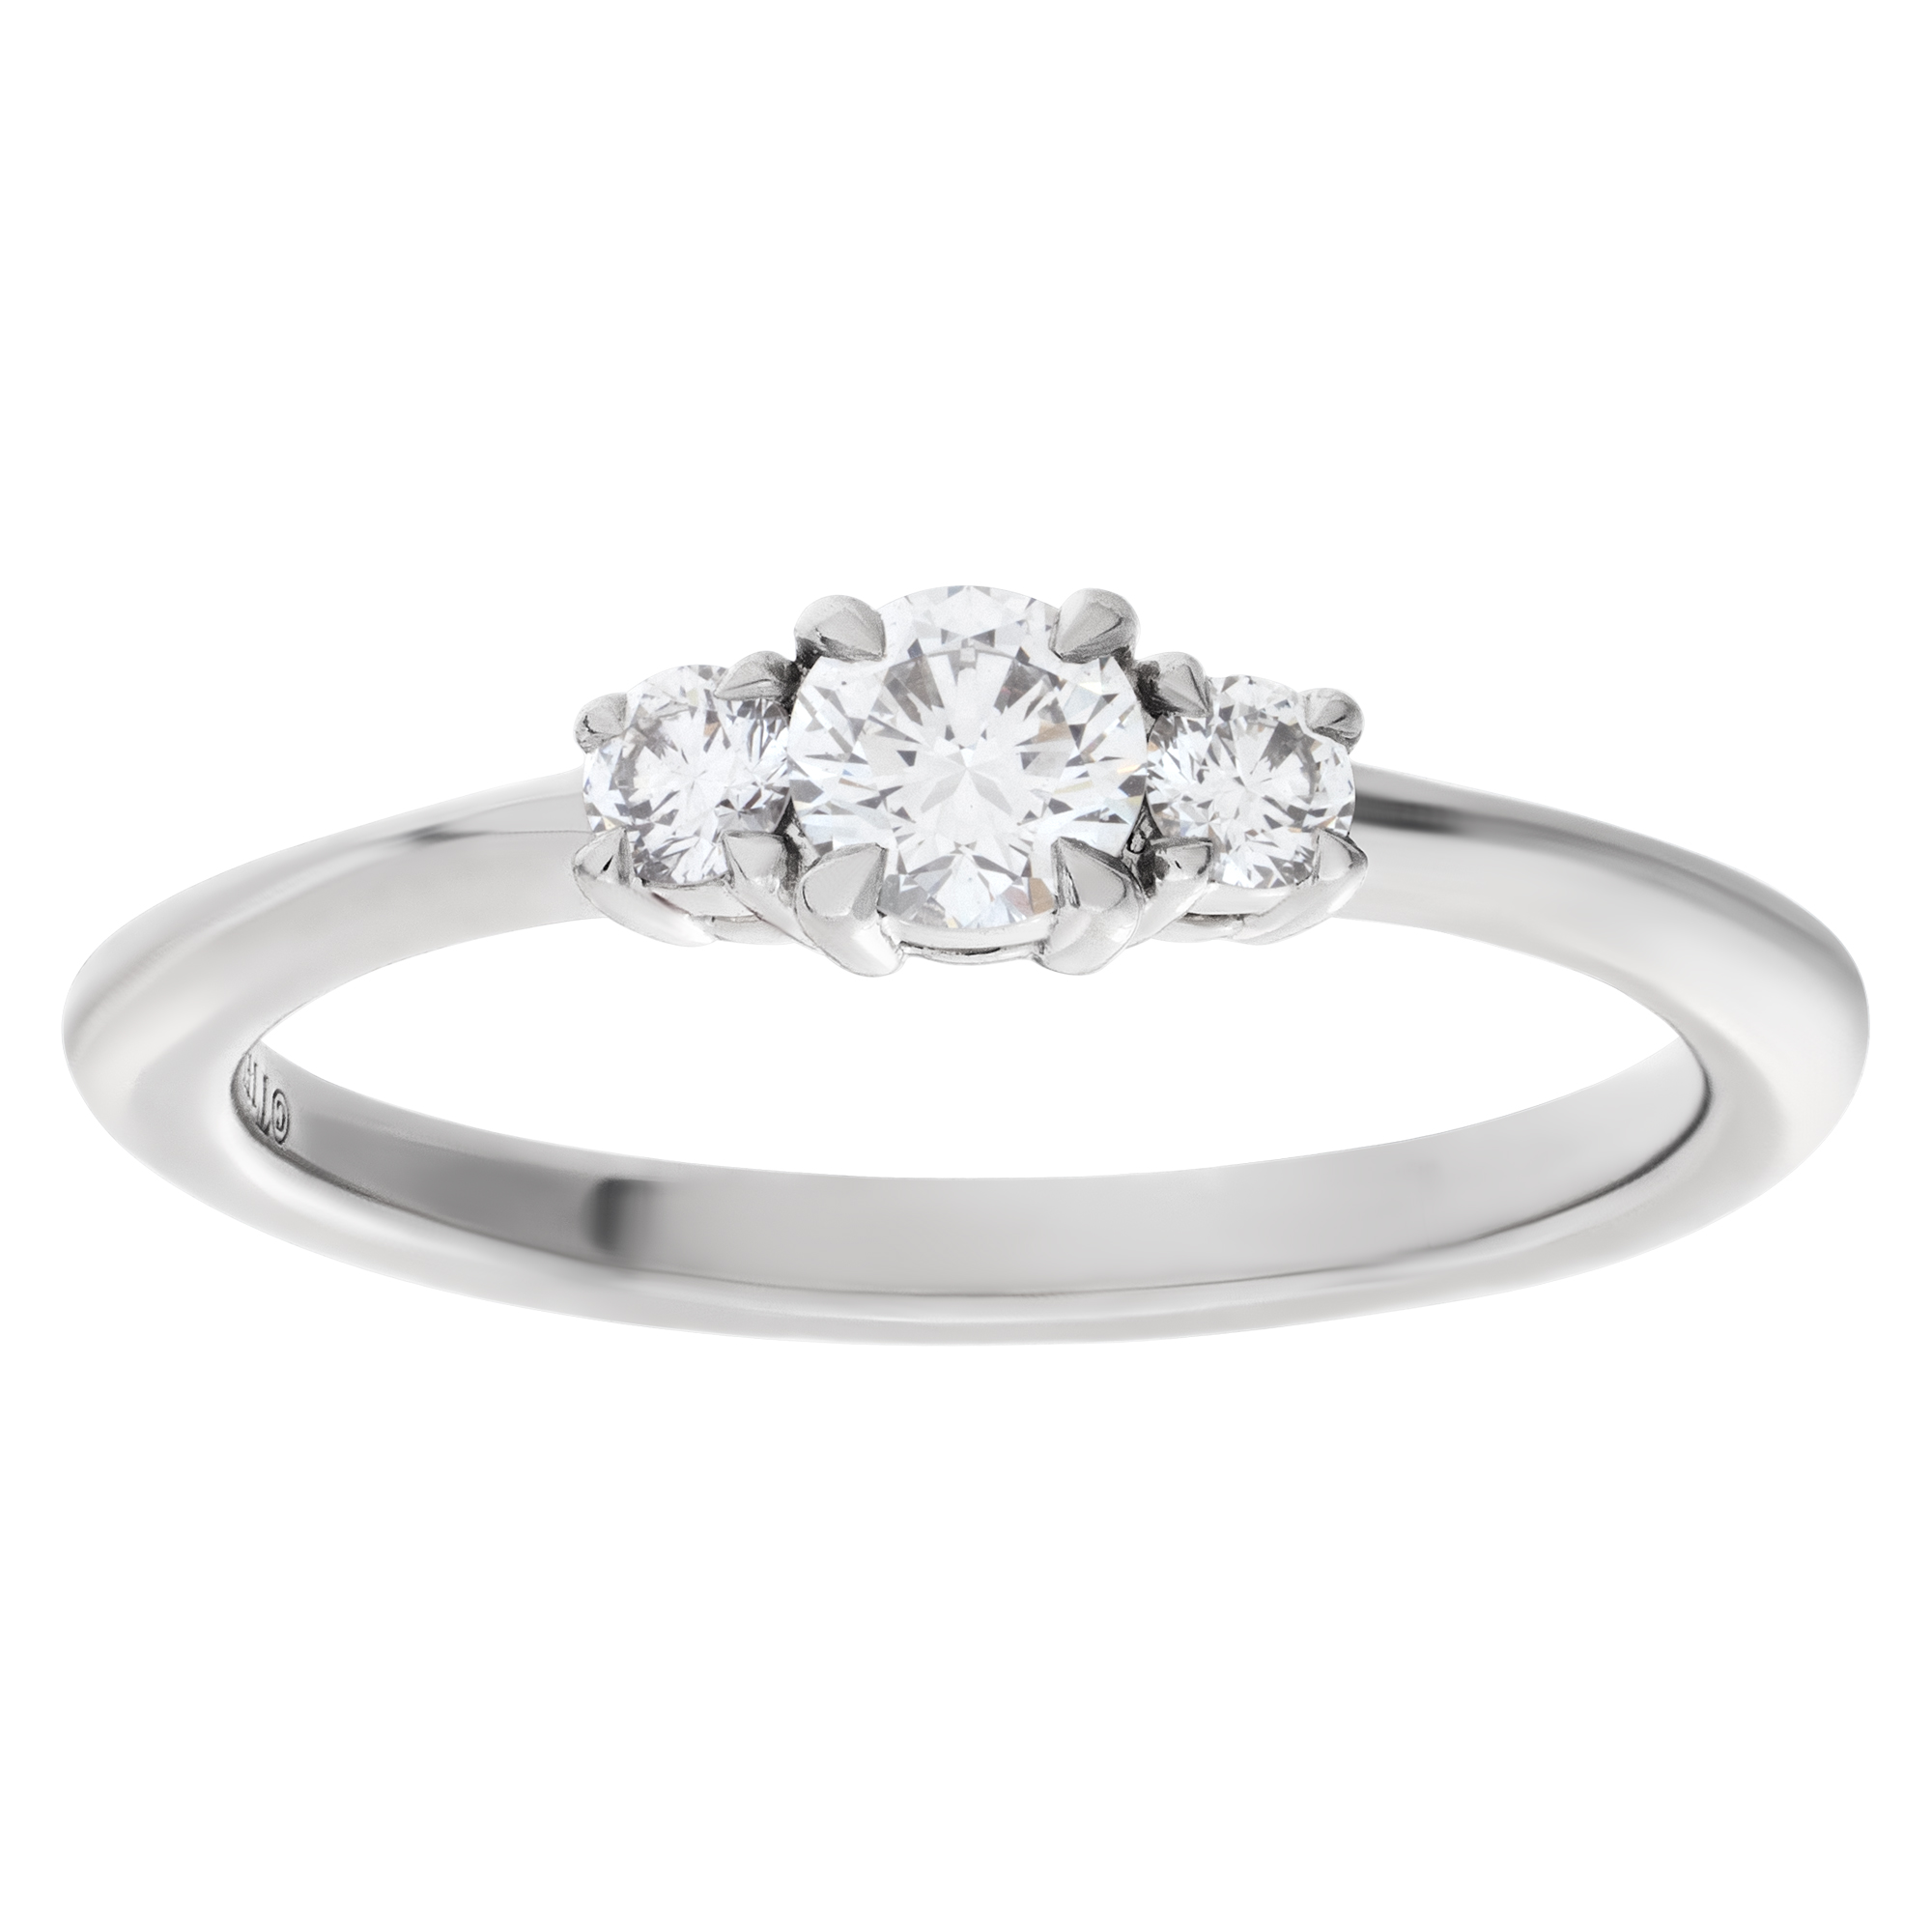 Tiffany & Co. 3 Stone Diamond Ring in Platinum image 1